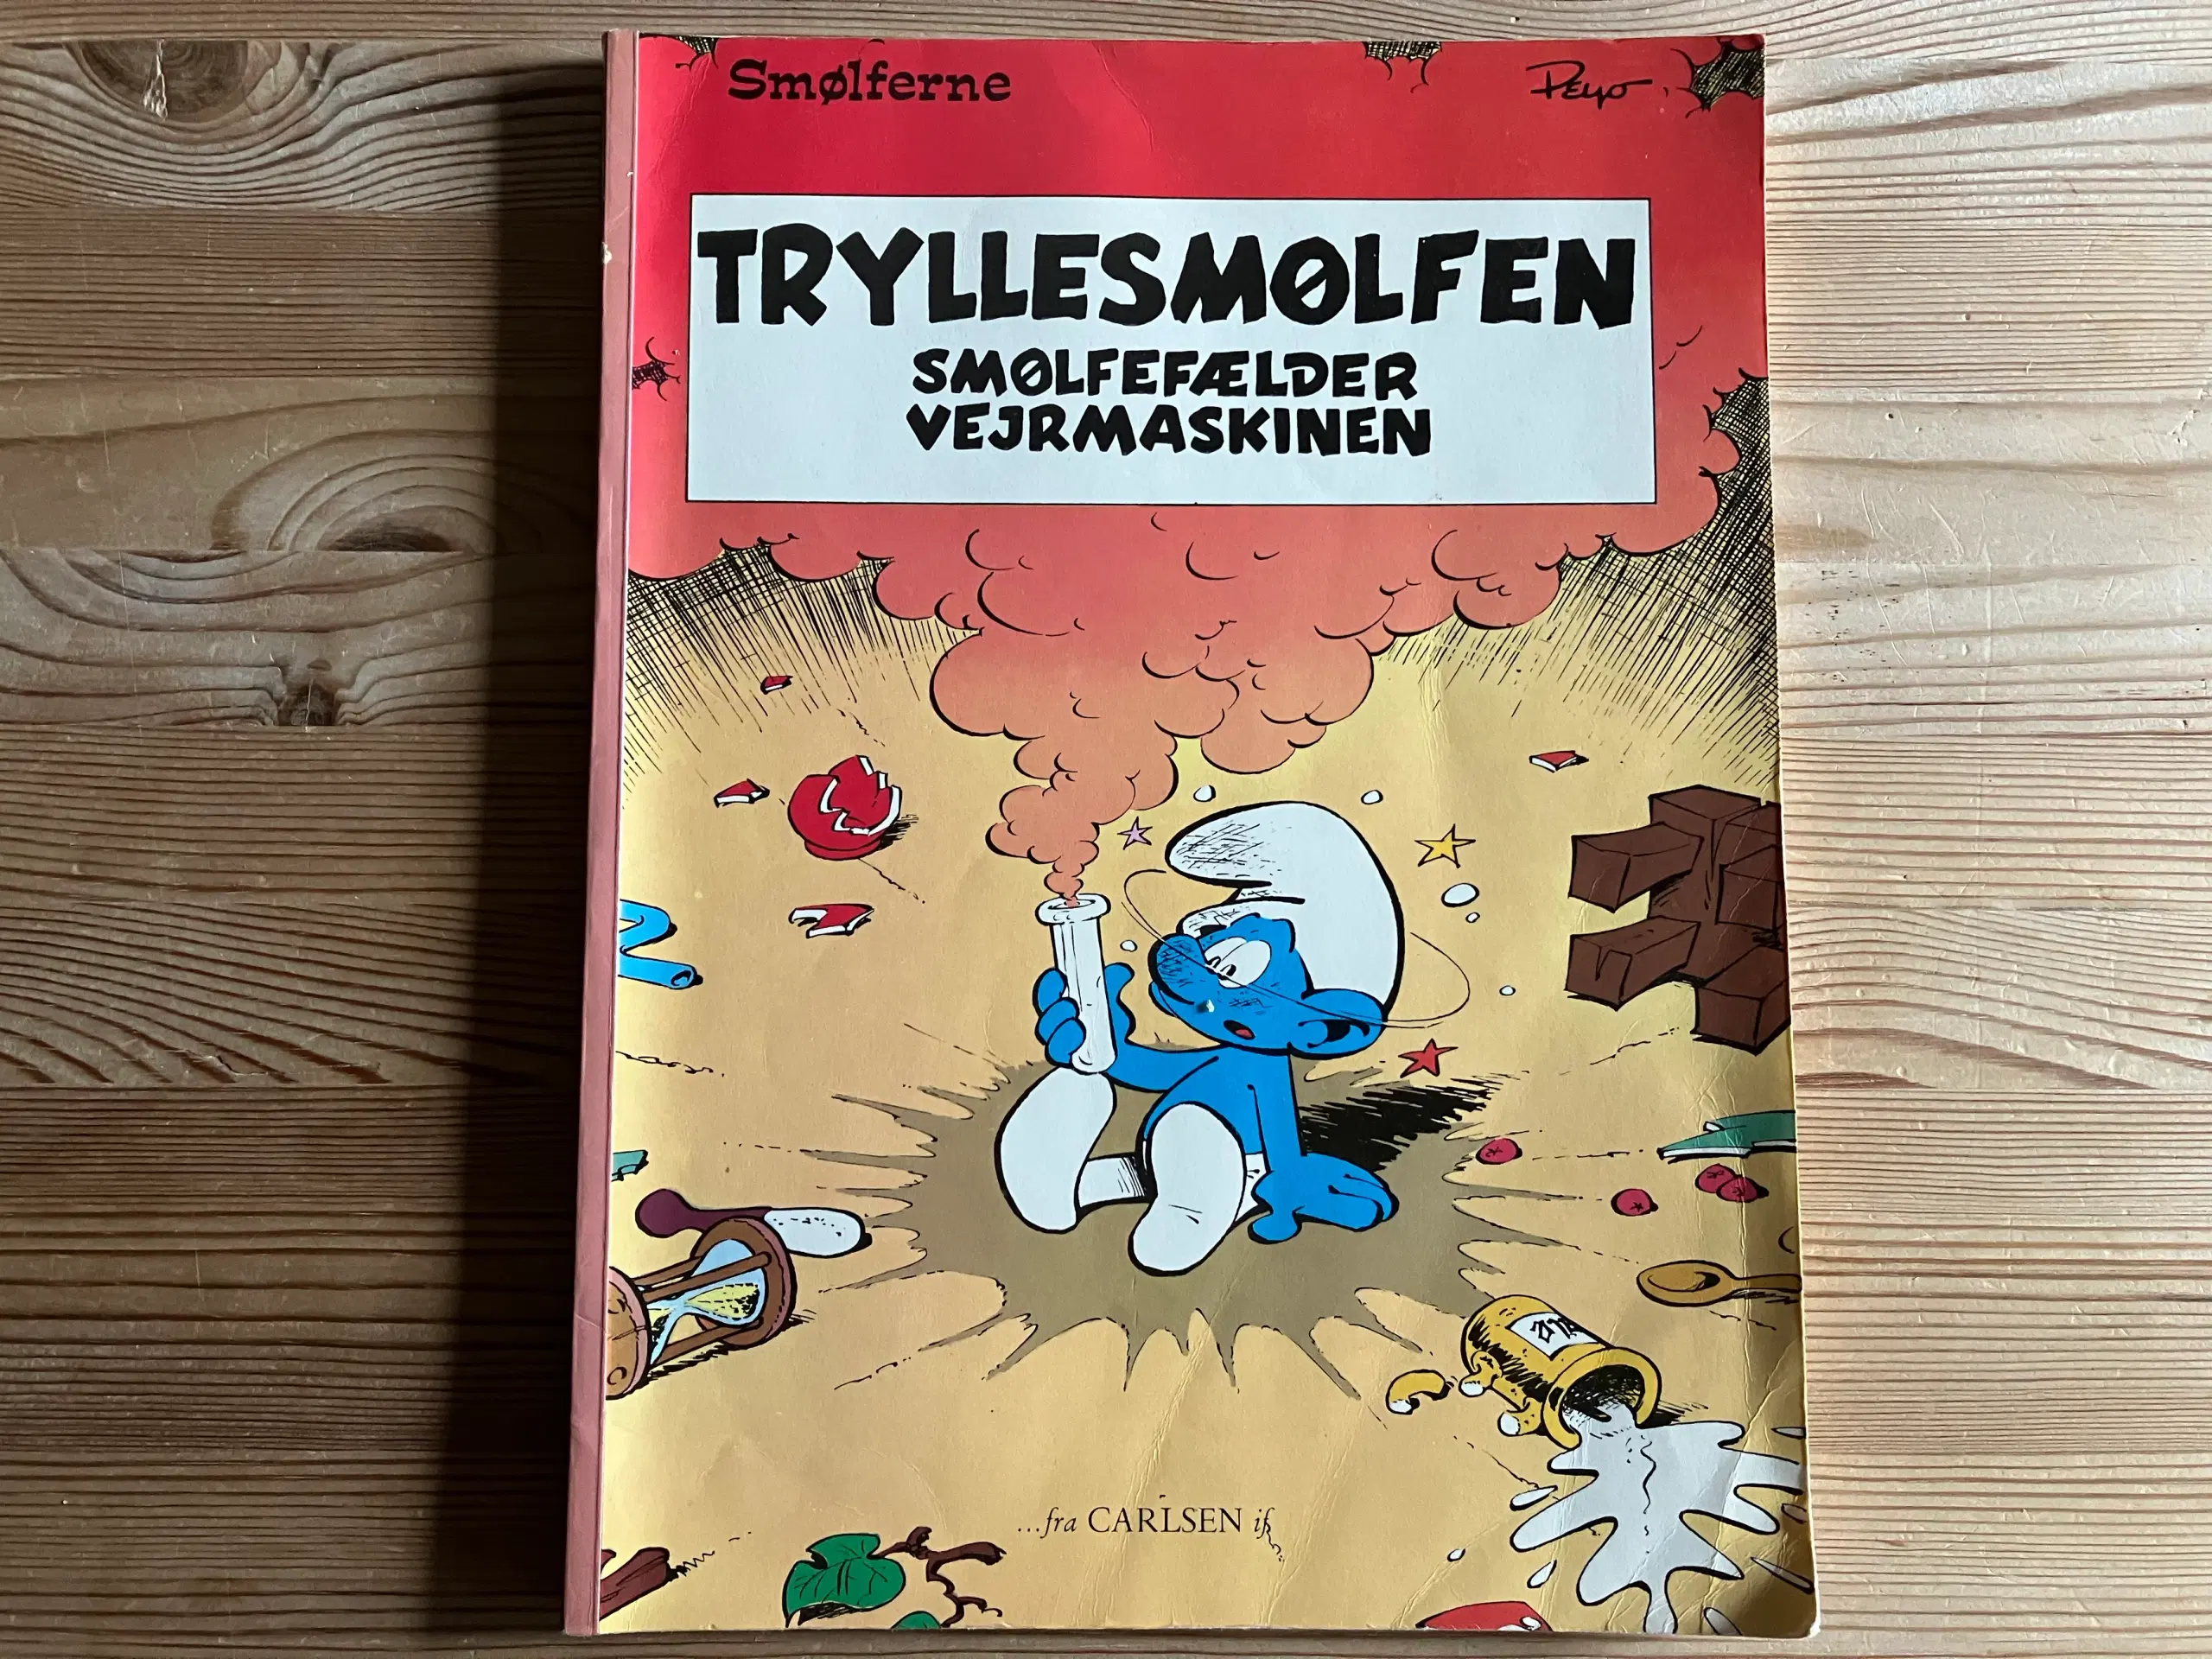 16 gamle tegneseriealbum Smølferne Frændeløs